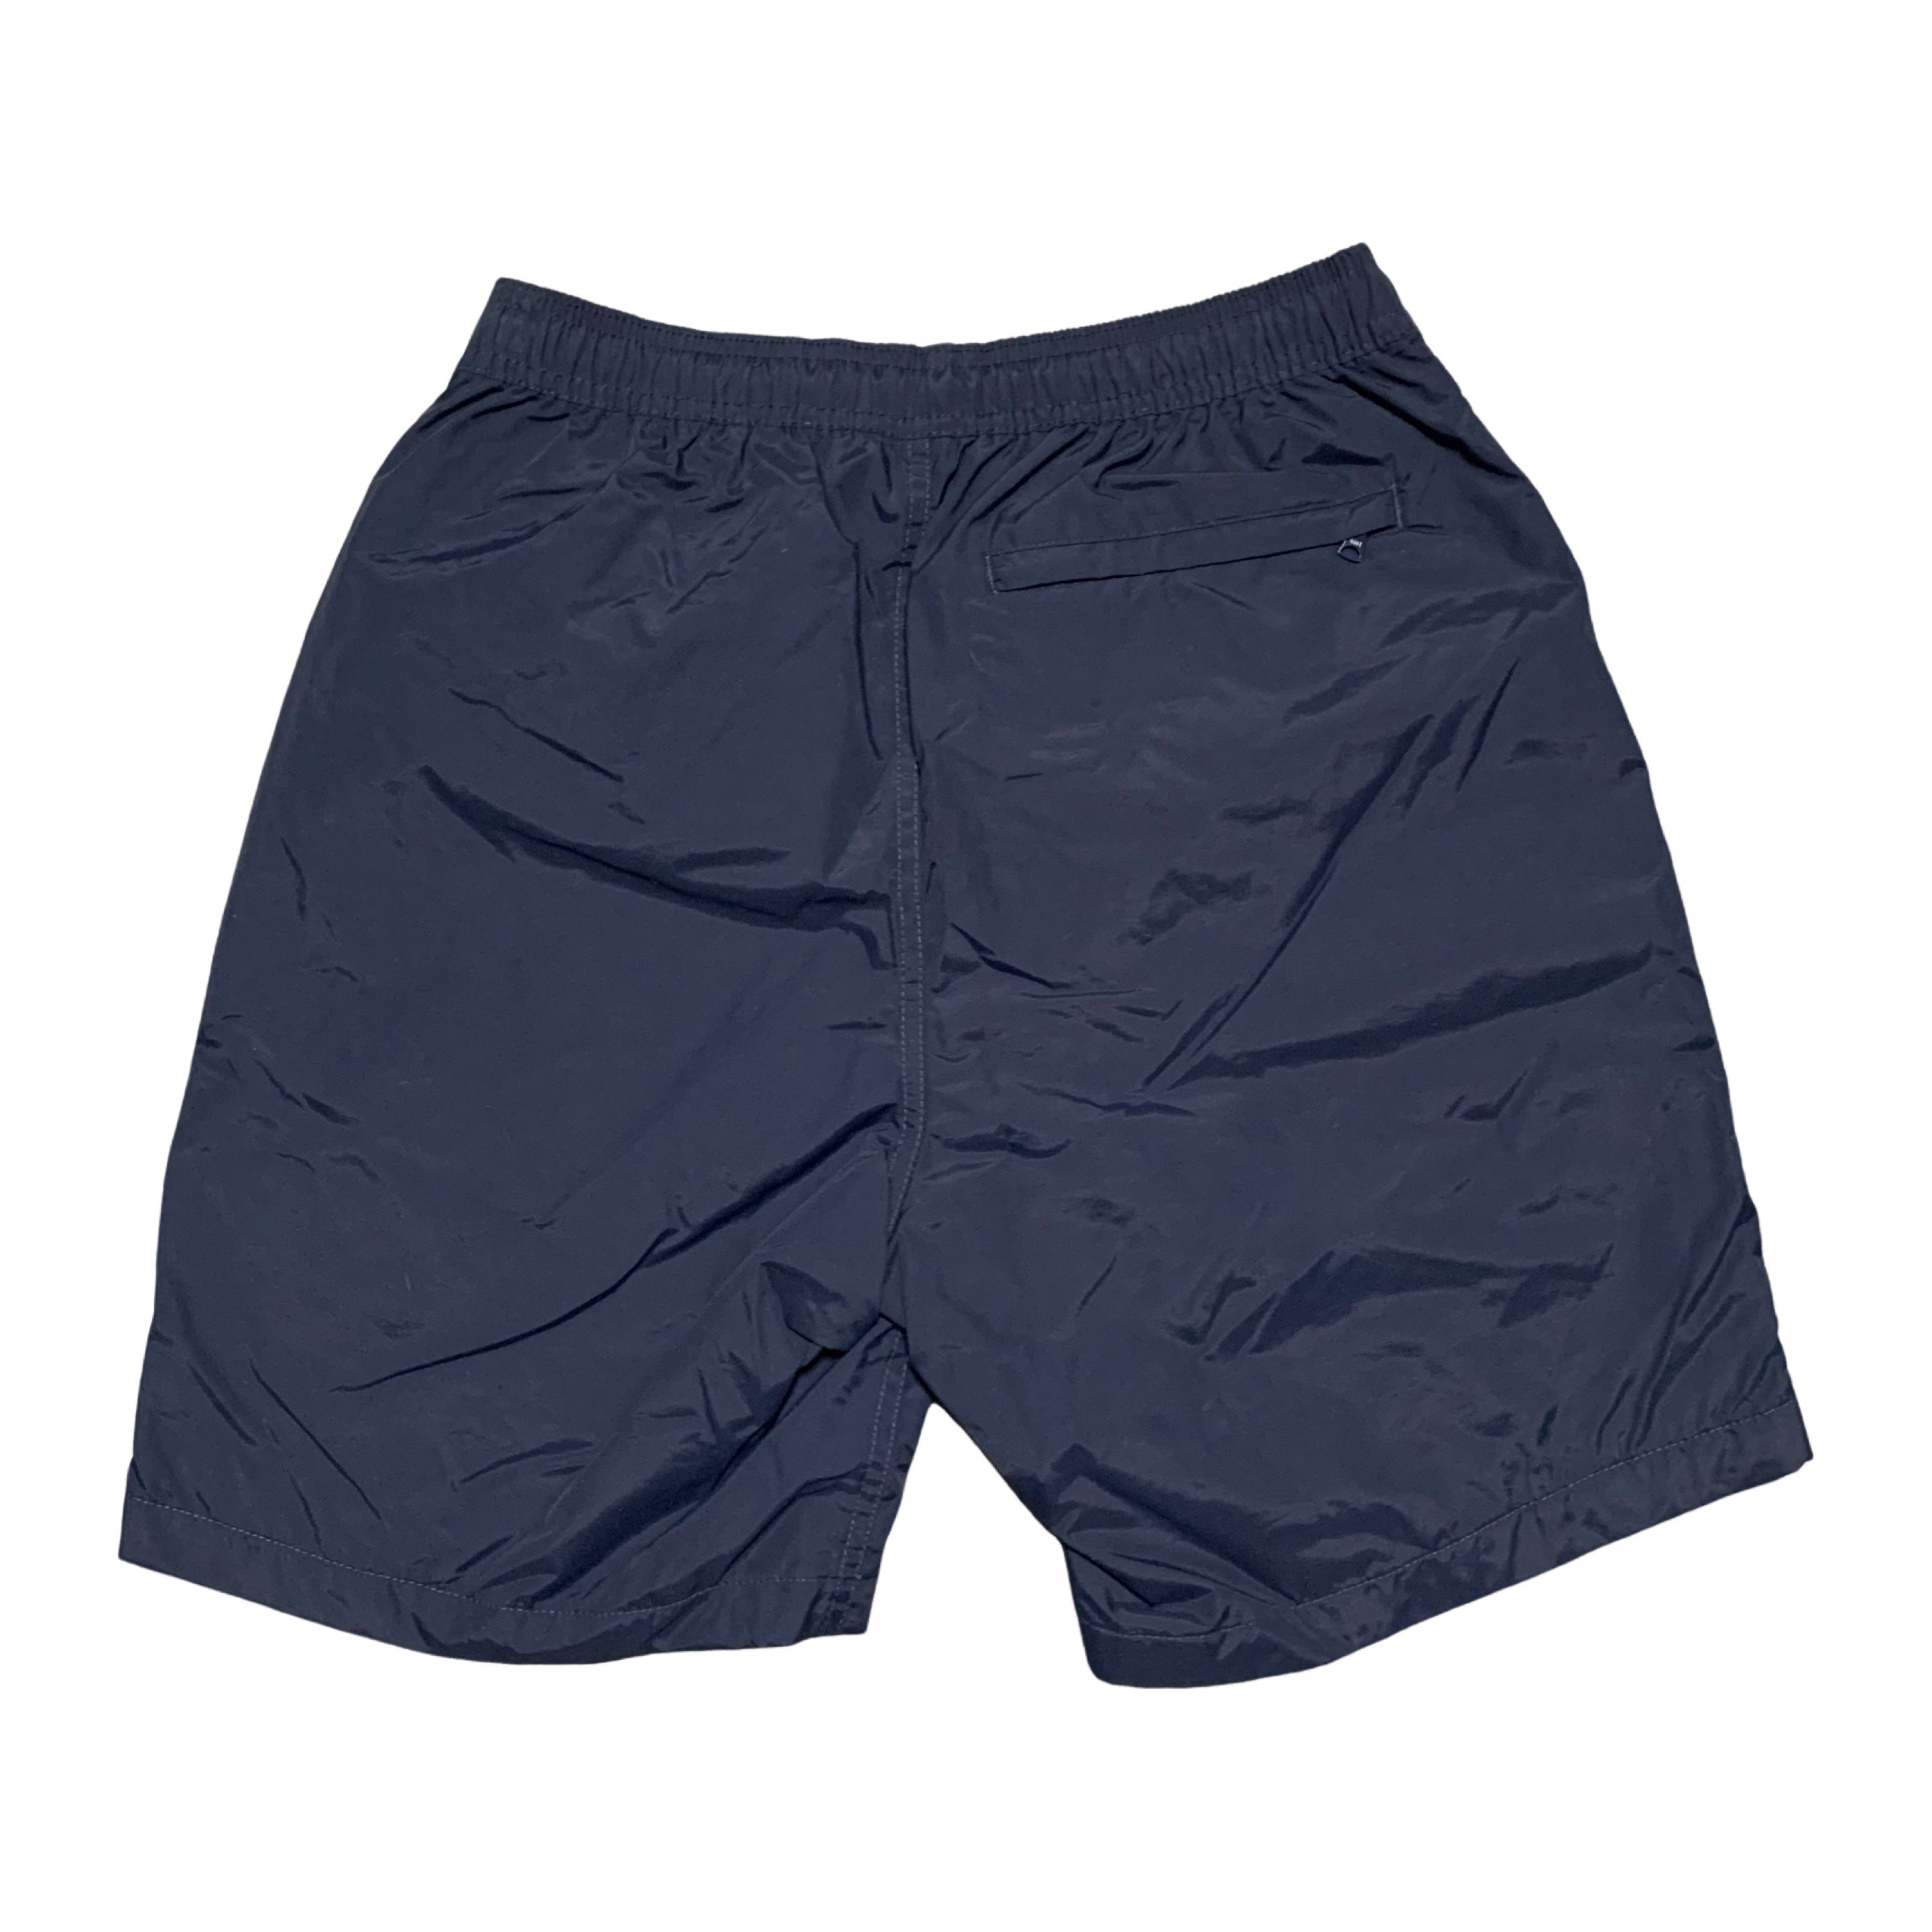 Bape Small Shorts Navy Blue Nylon Beach Shorts A Bathing Ape